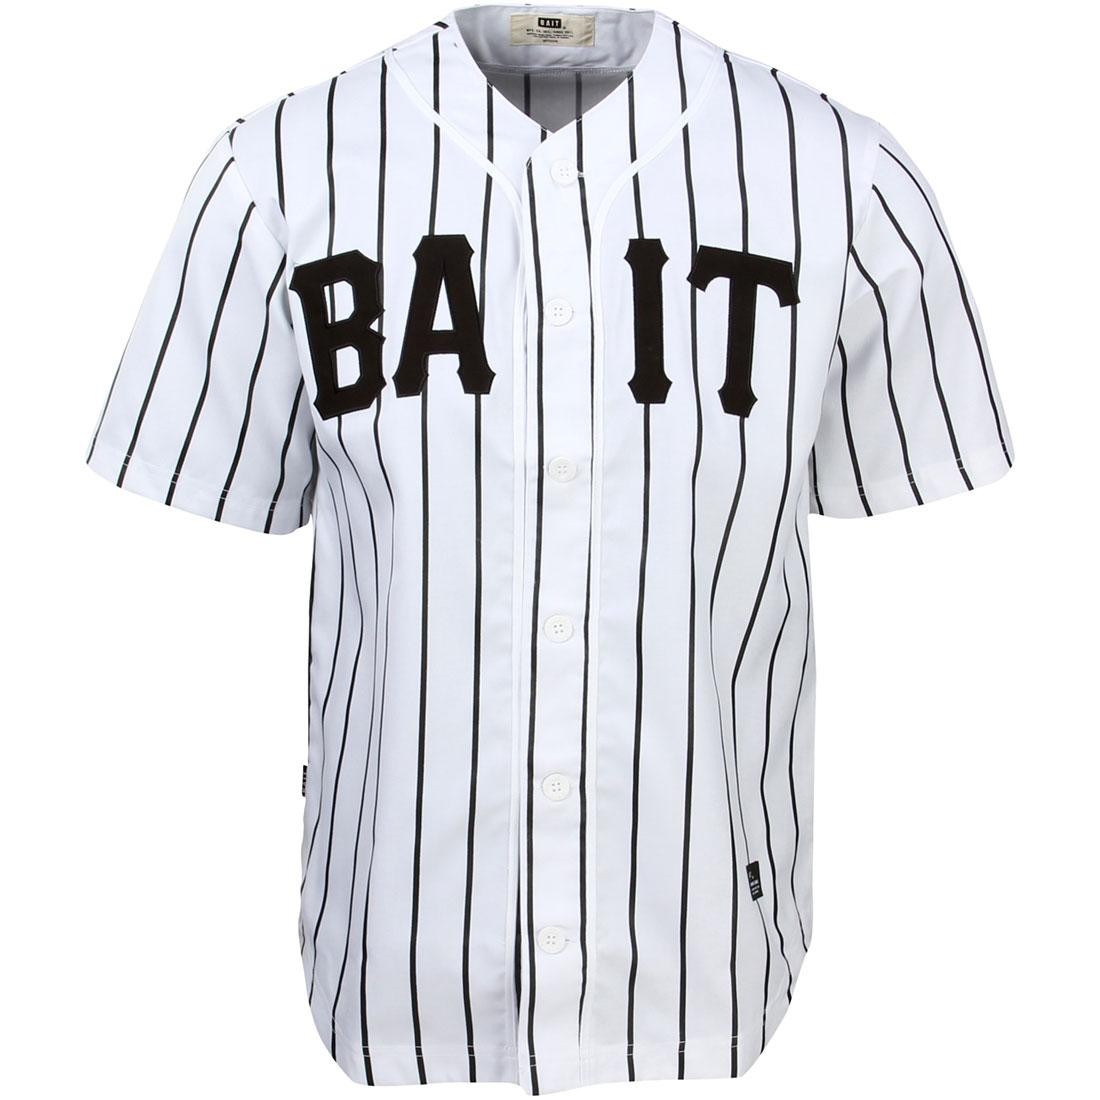 BAIT Men Sluggers Baseball Jersey - Pinstripe red black